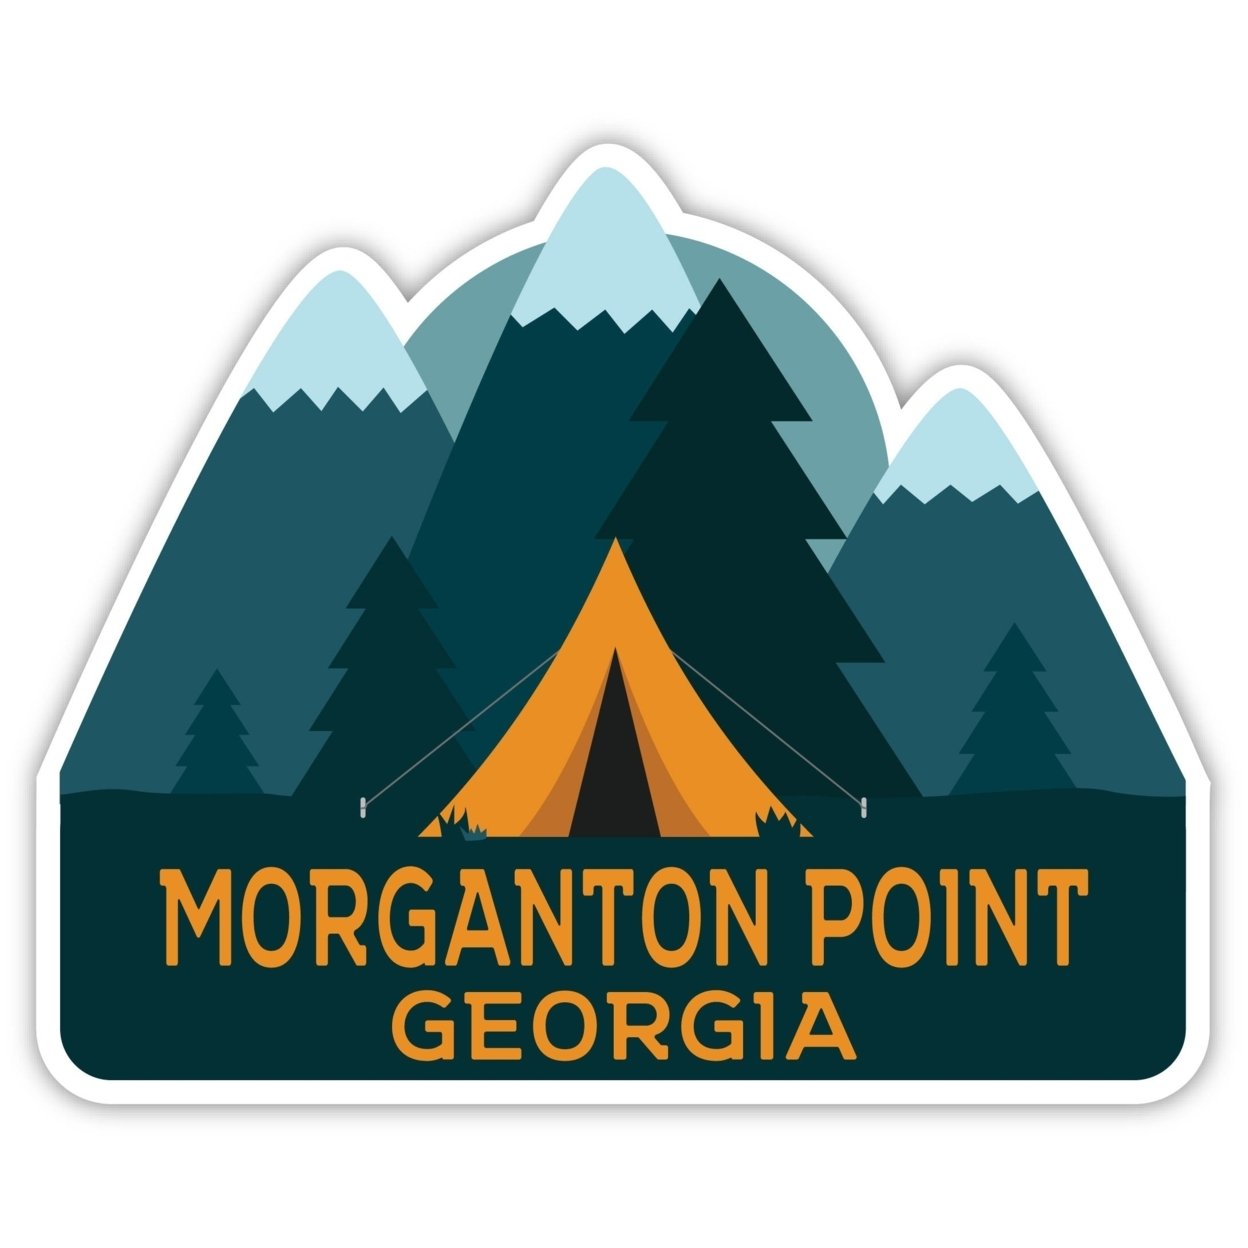 Morganton Point Georgia Souvenir Decorative Stickers (Choose Theme And Size) - Single Unit, 2-Inch, Tent